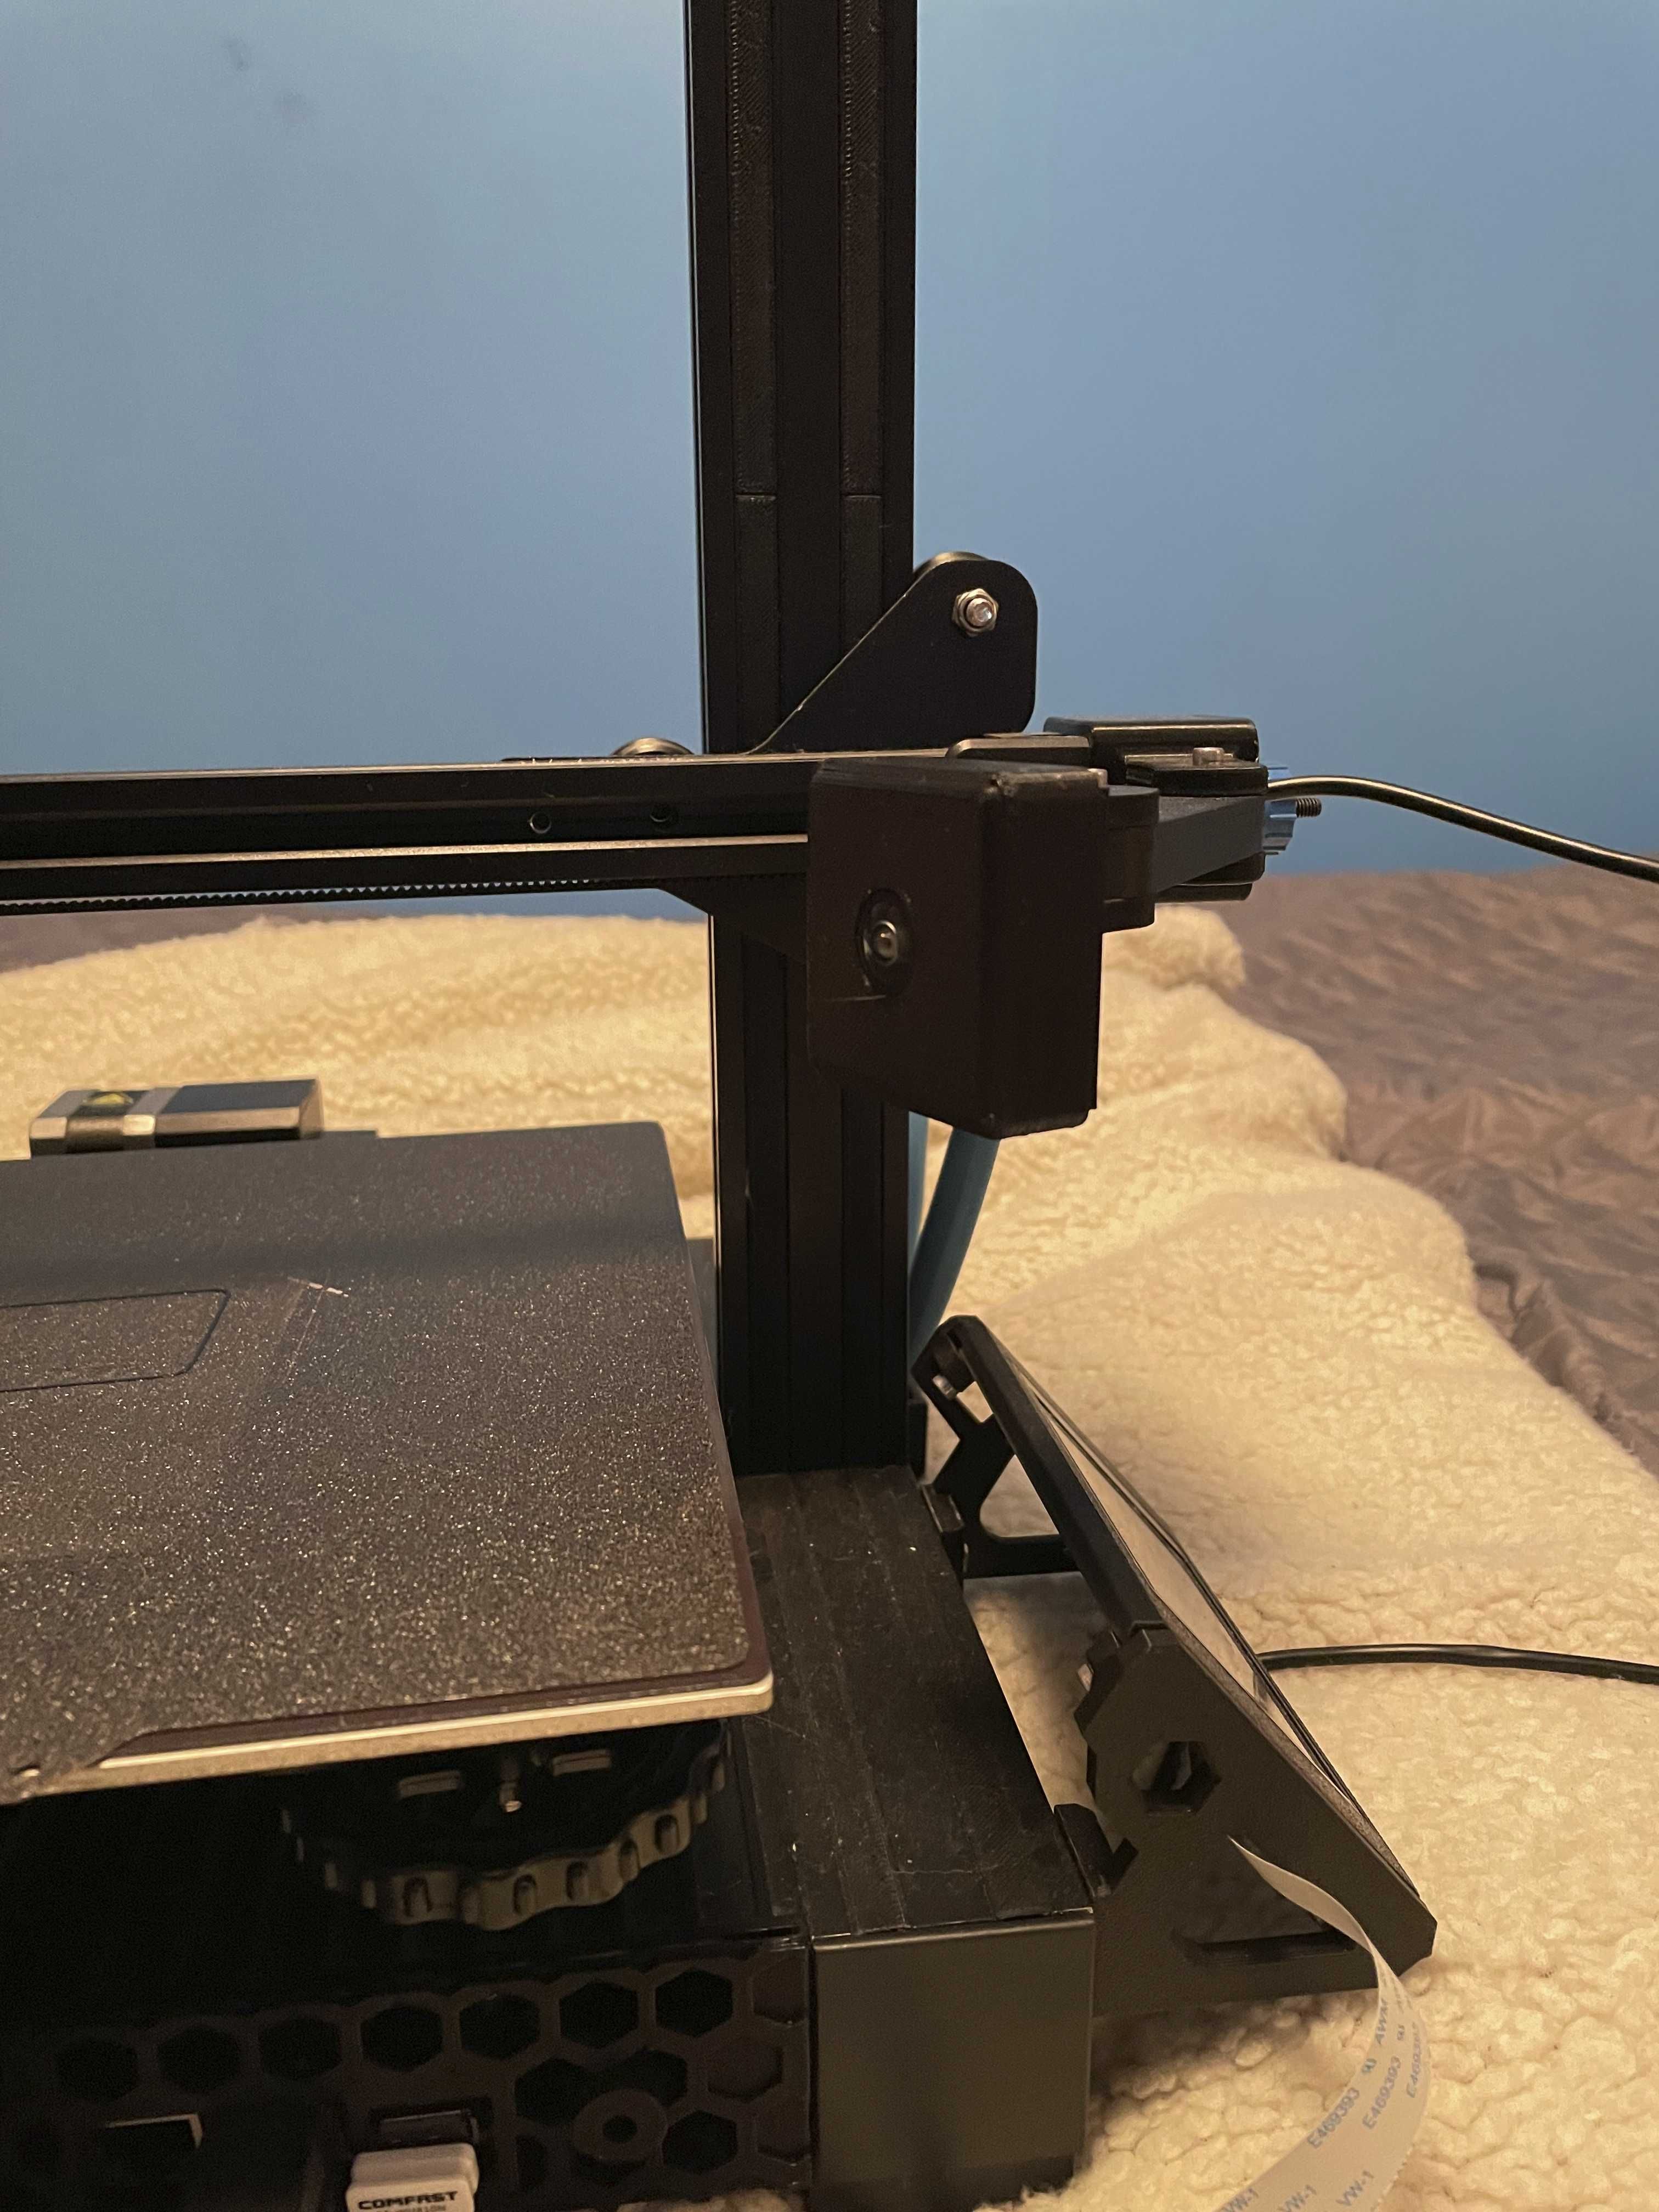 Impressora 3D Ender 3 V2 direct drive e klipper